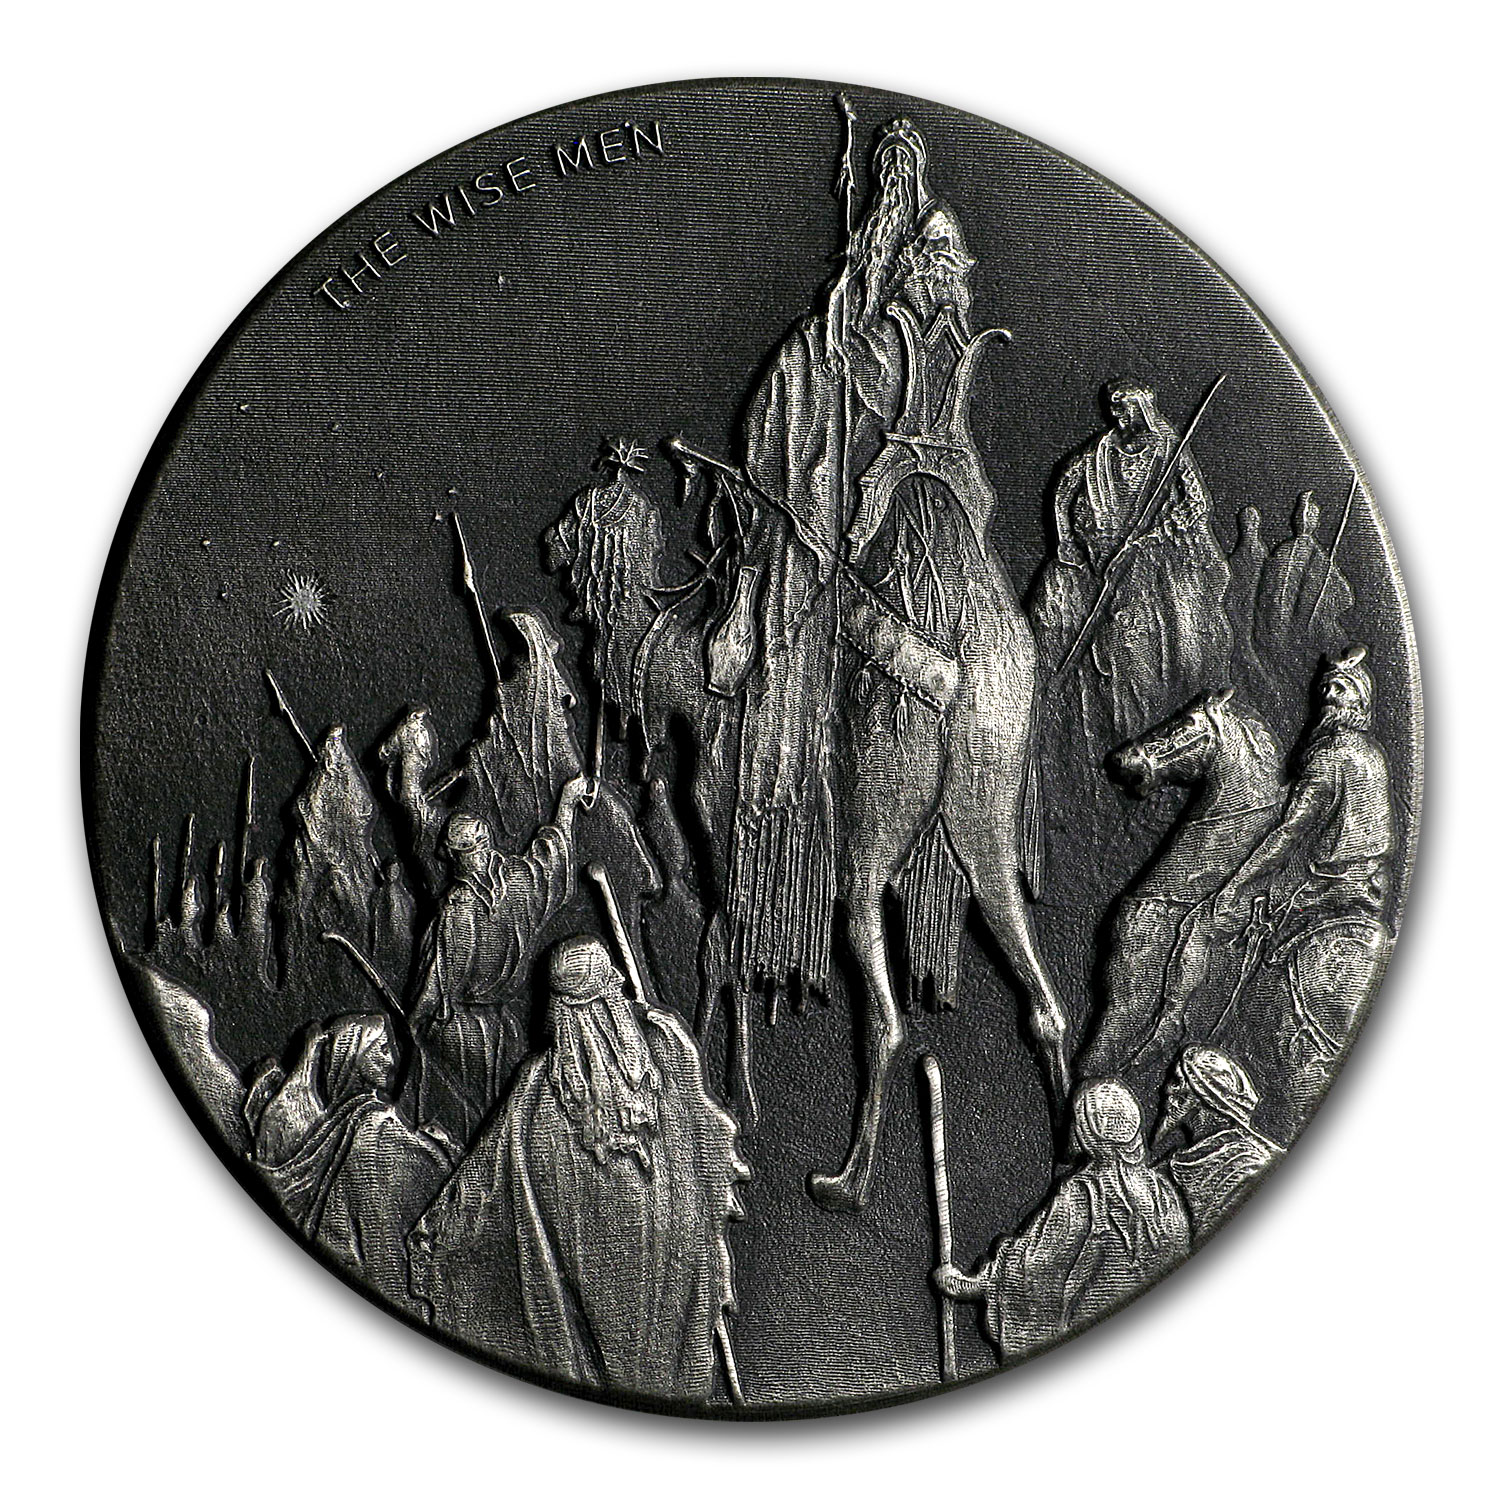 Buy 2017 2 oz Silver Coin - Biblical Series (The Wise Men)